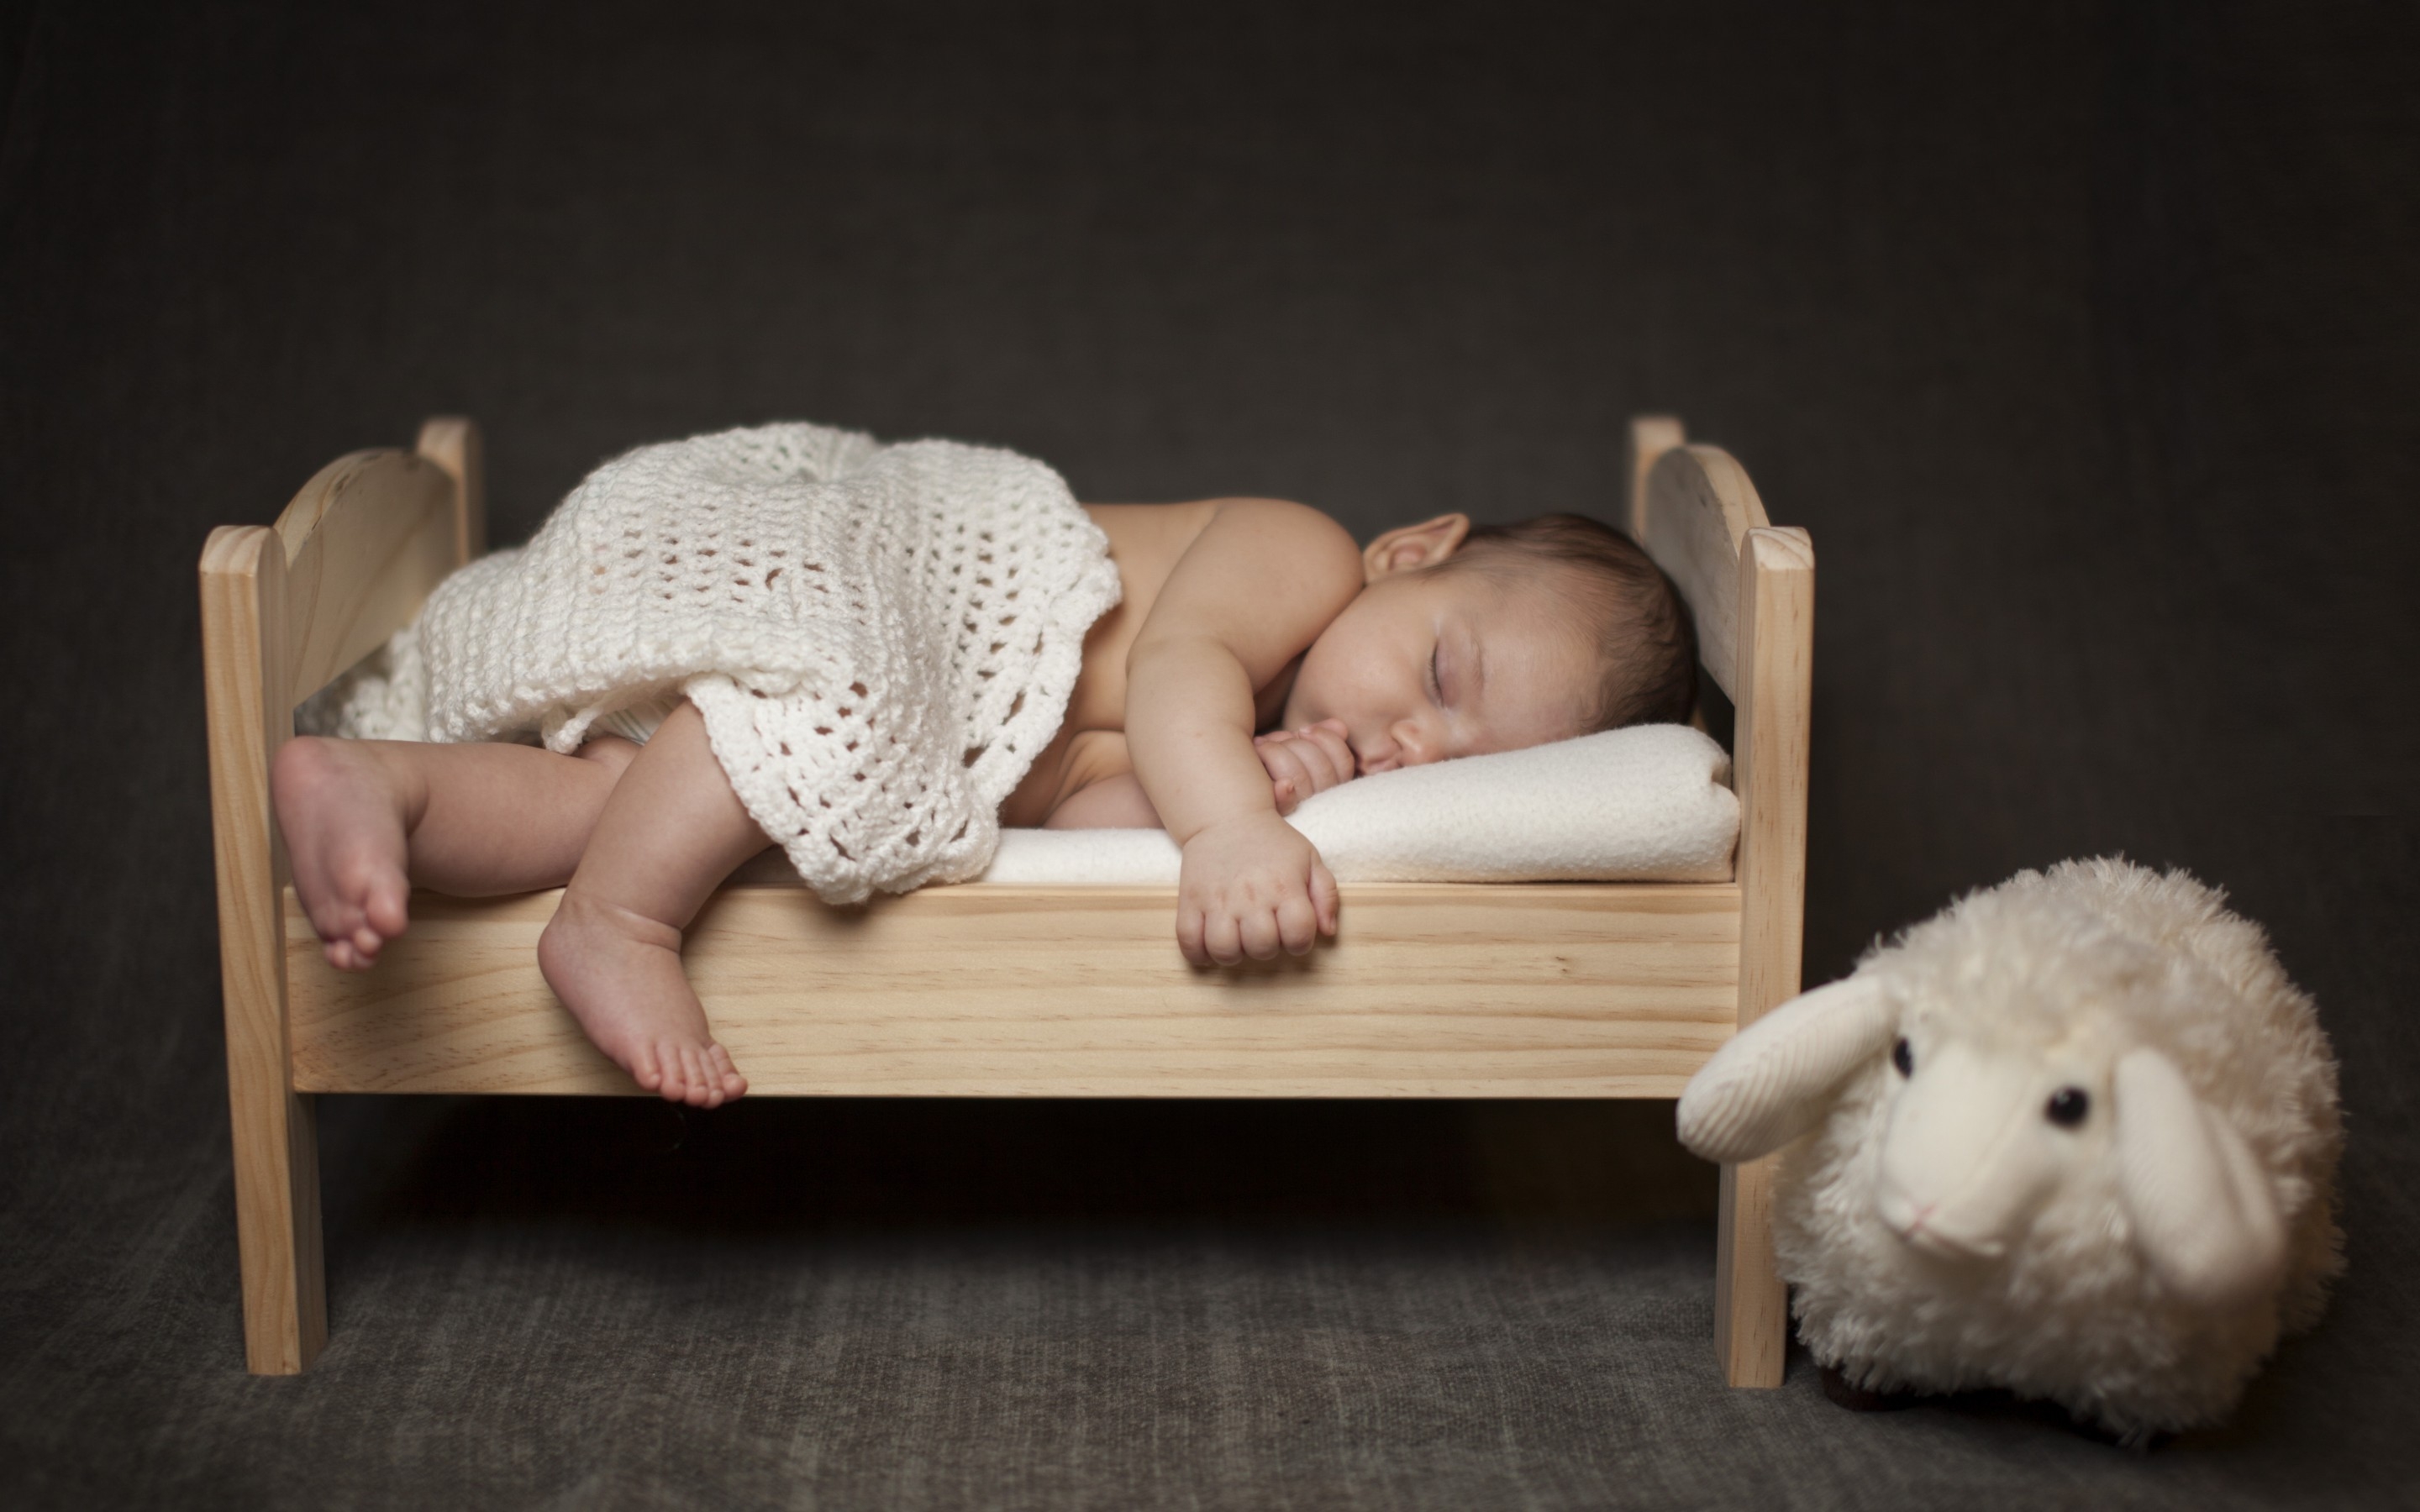 Baby Boy Sleeping for 2880 x 1800 Retina Display resolution